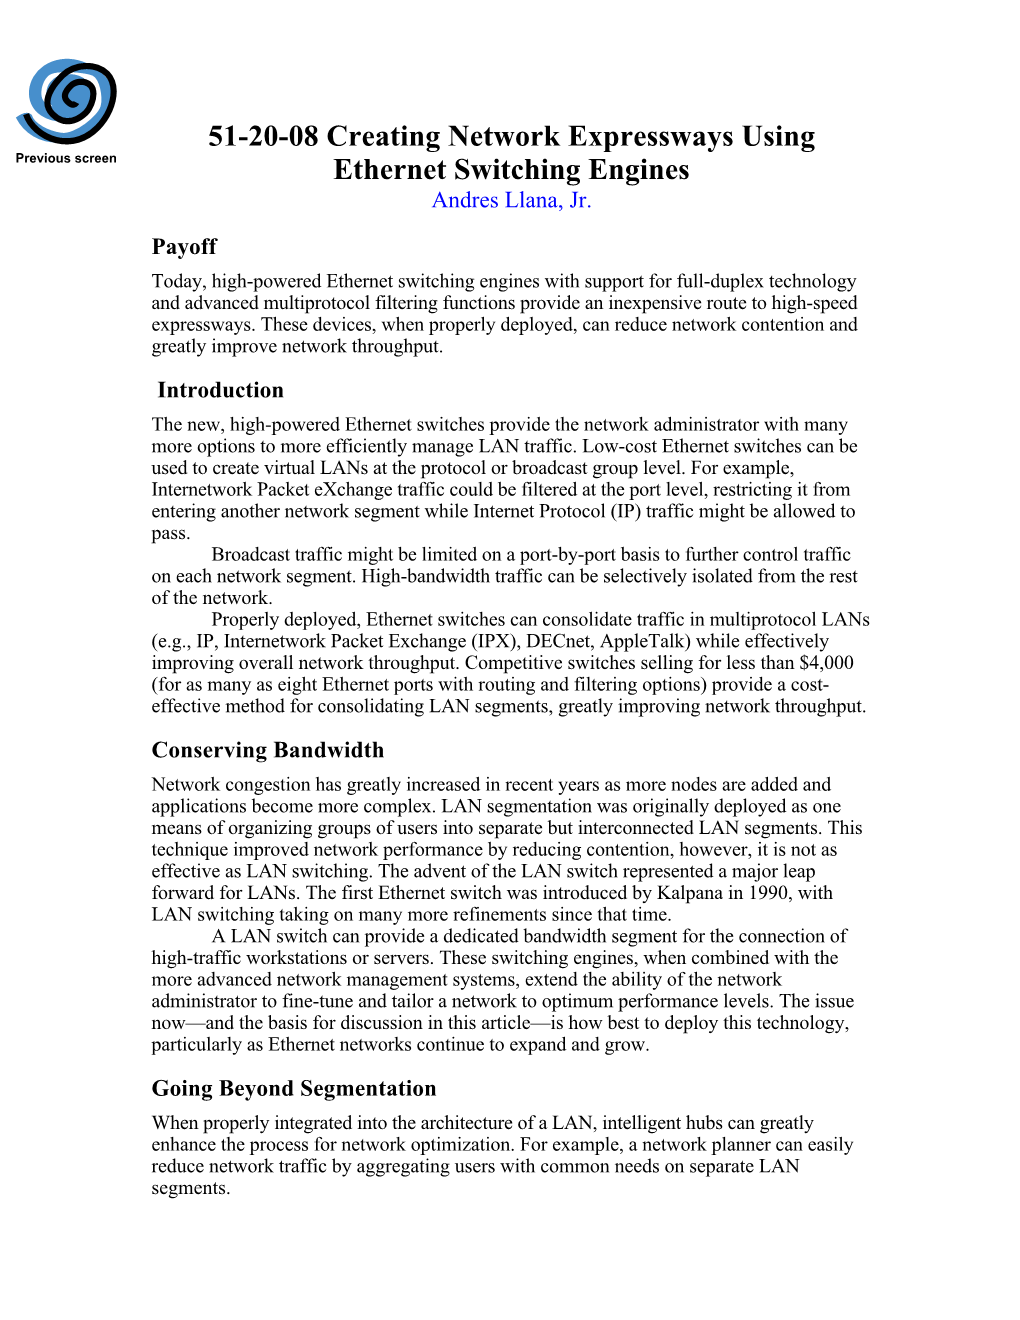 Creating Network Expressways Using Ethernet Switching Engines